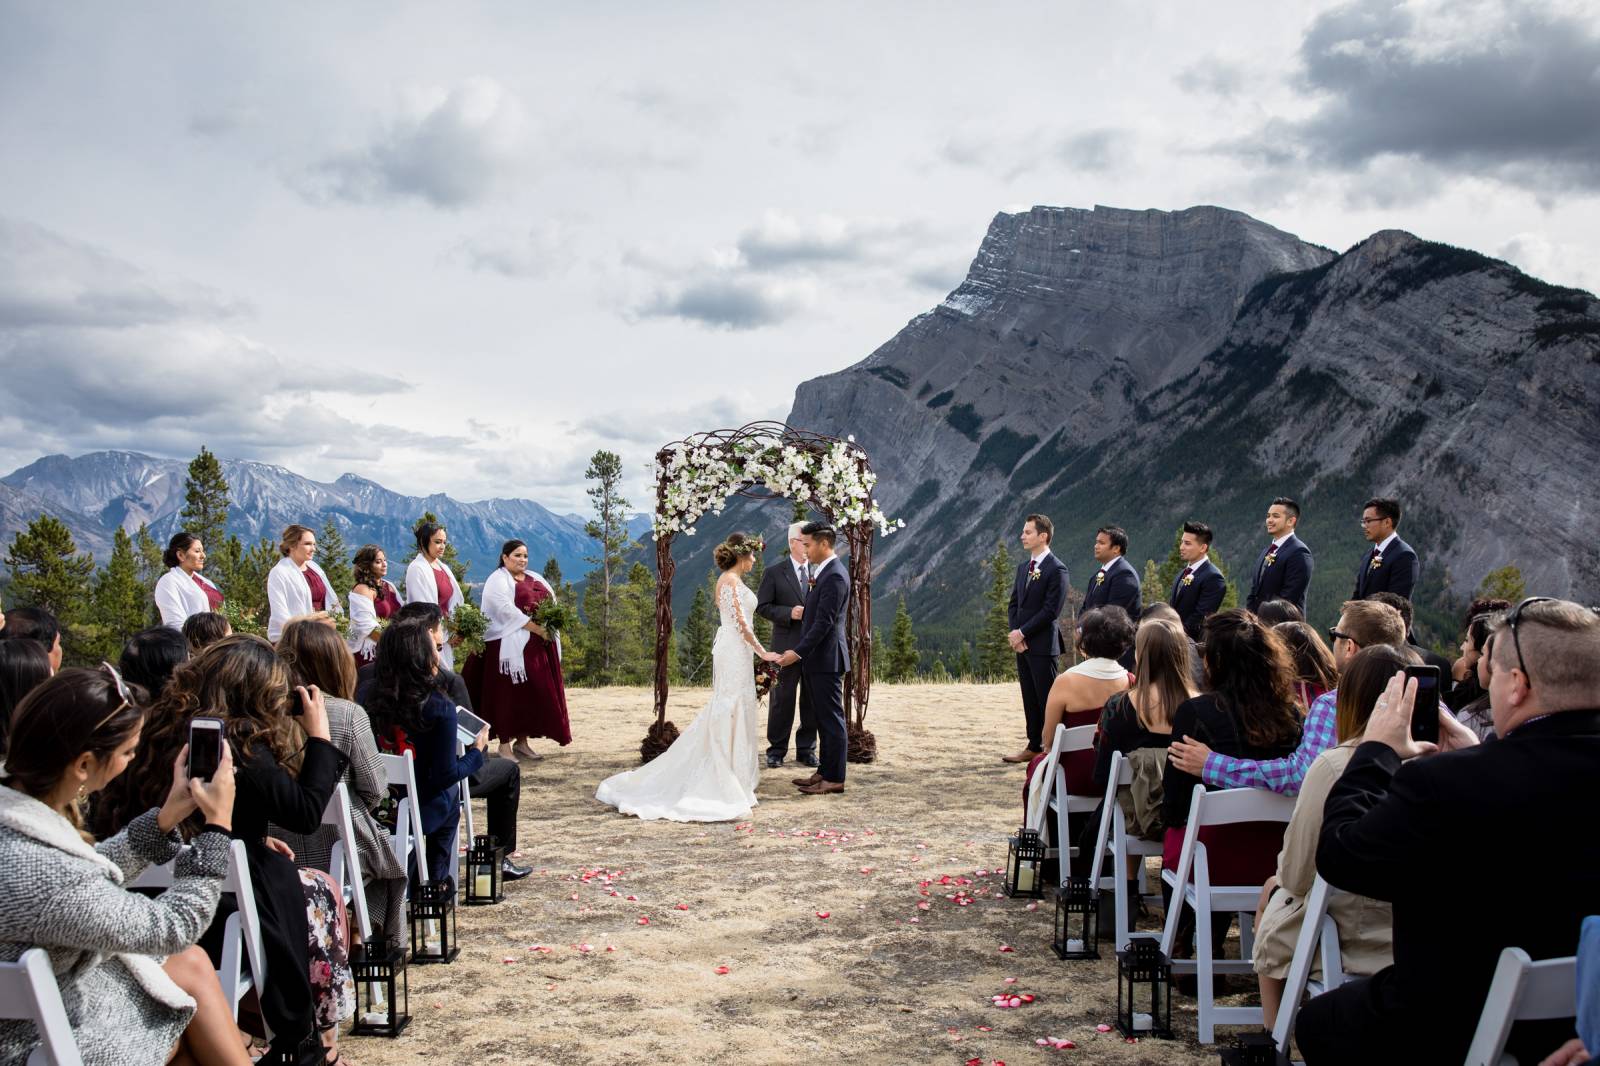 Tunnel Mountain Reservoir outdoor wedding ceremony, Fall wedding, outdoor wedding ceremony, outdoor 